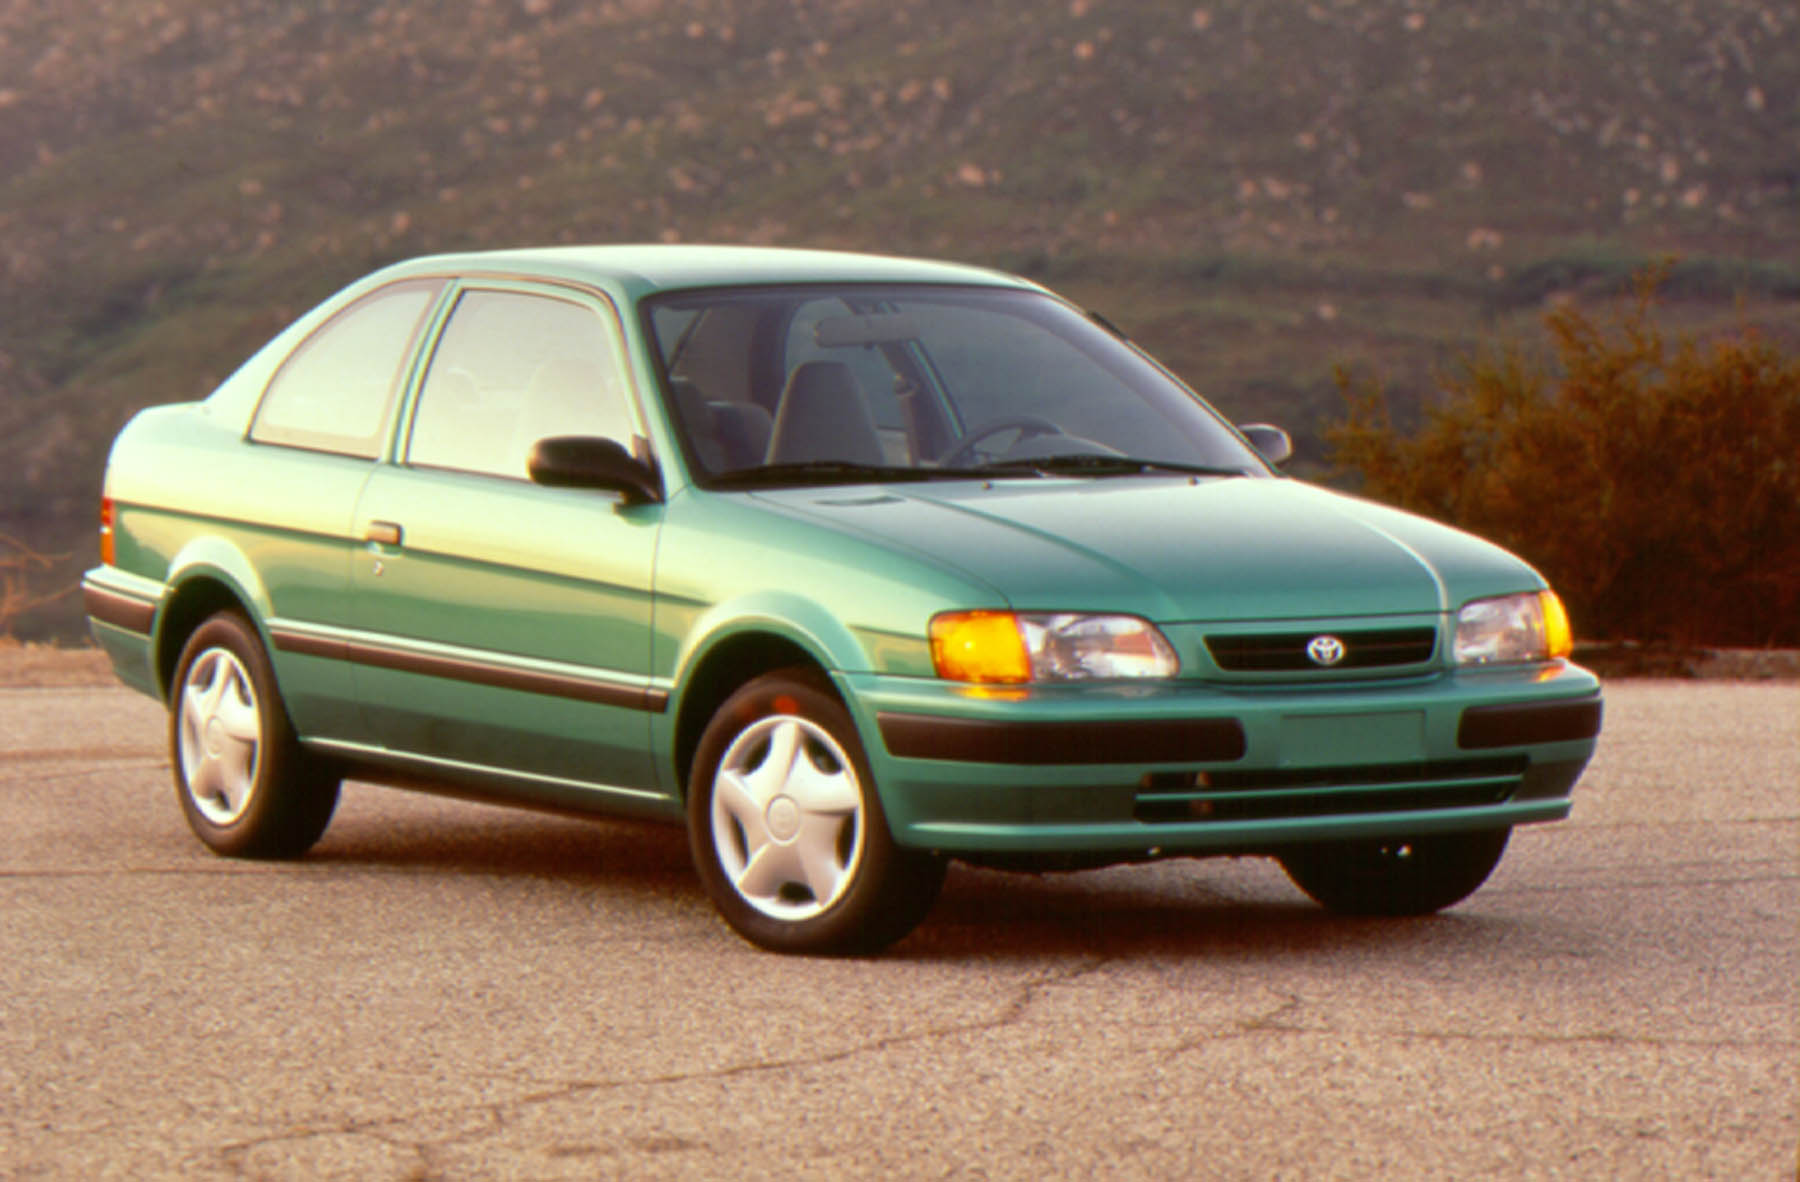 1995 - 1998 Toyota Tercel [Fifth (5th) Generation] - Toyota USA Newsroom